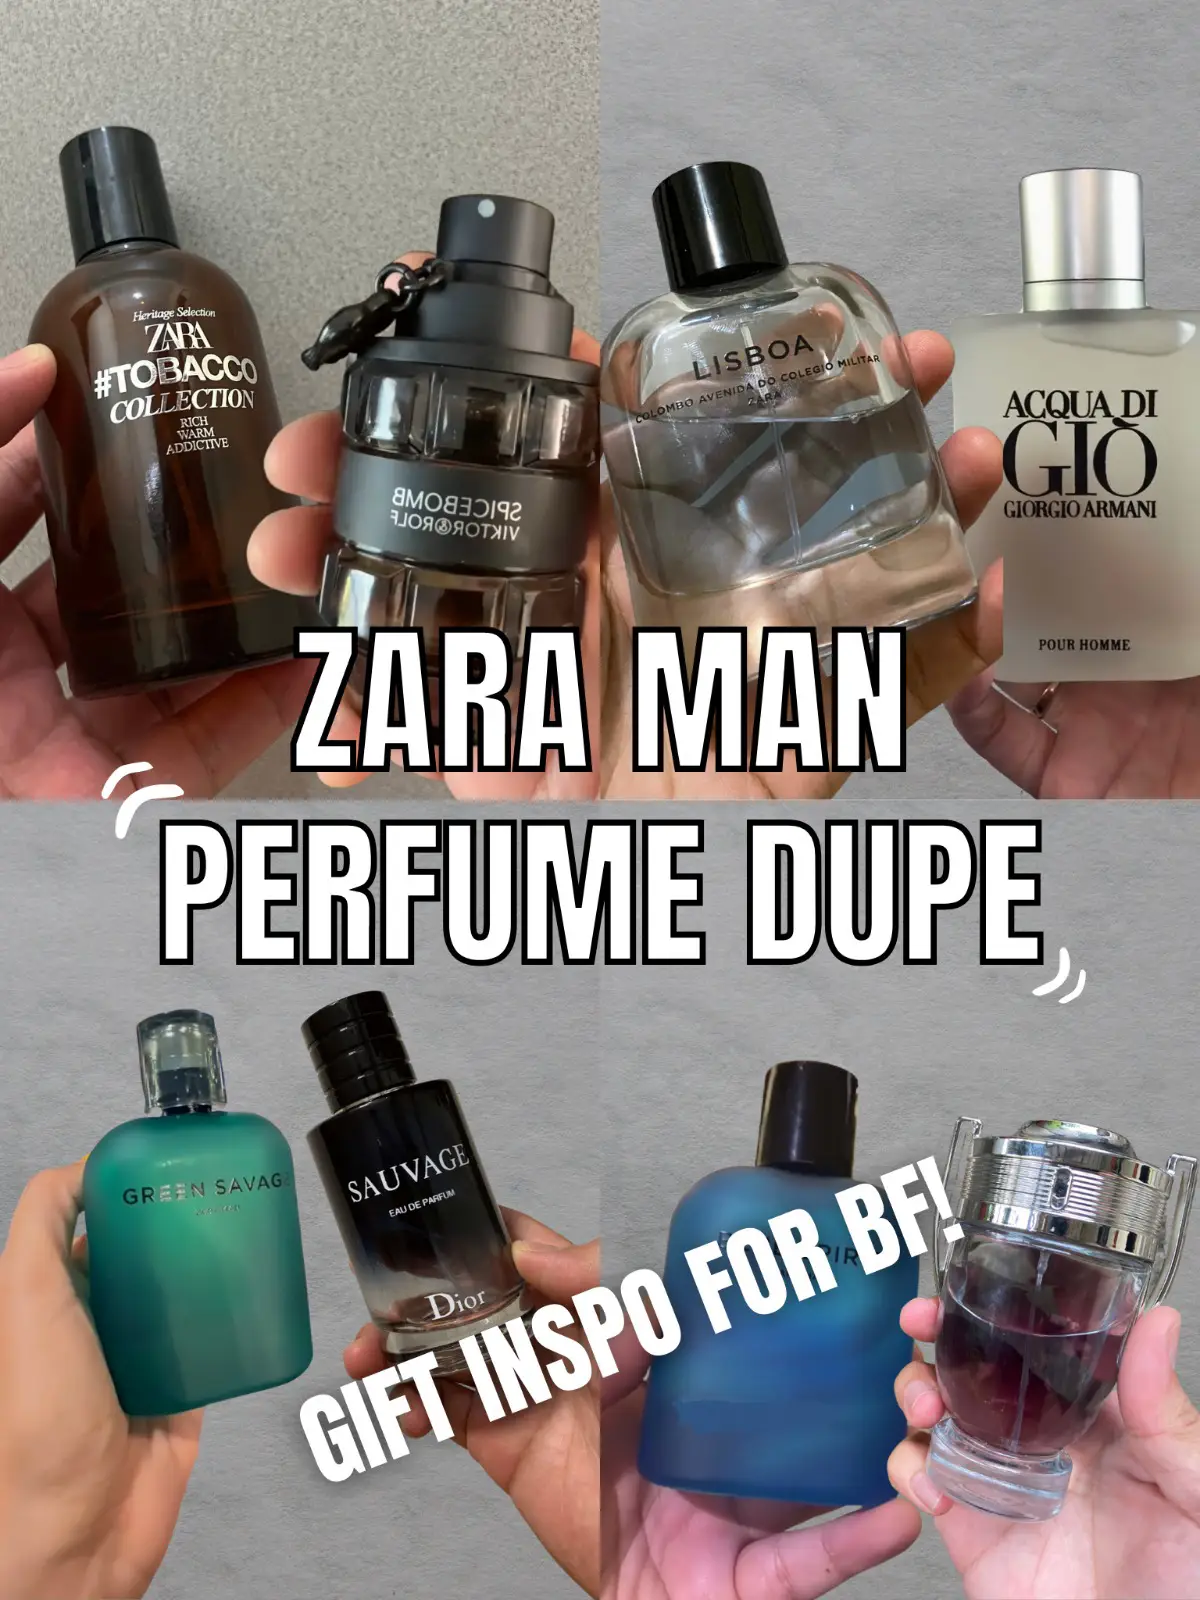 Zara Man Perfume Dupes! Gift inspo for boyfriend c